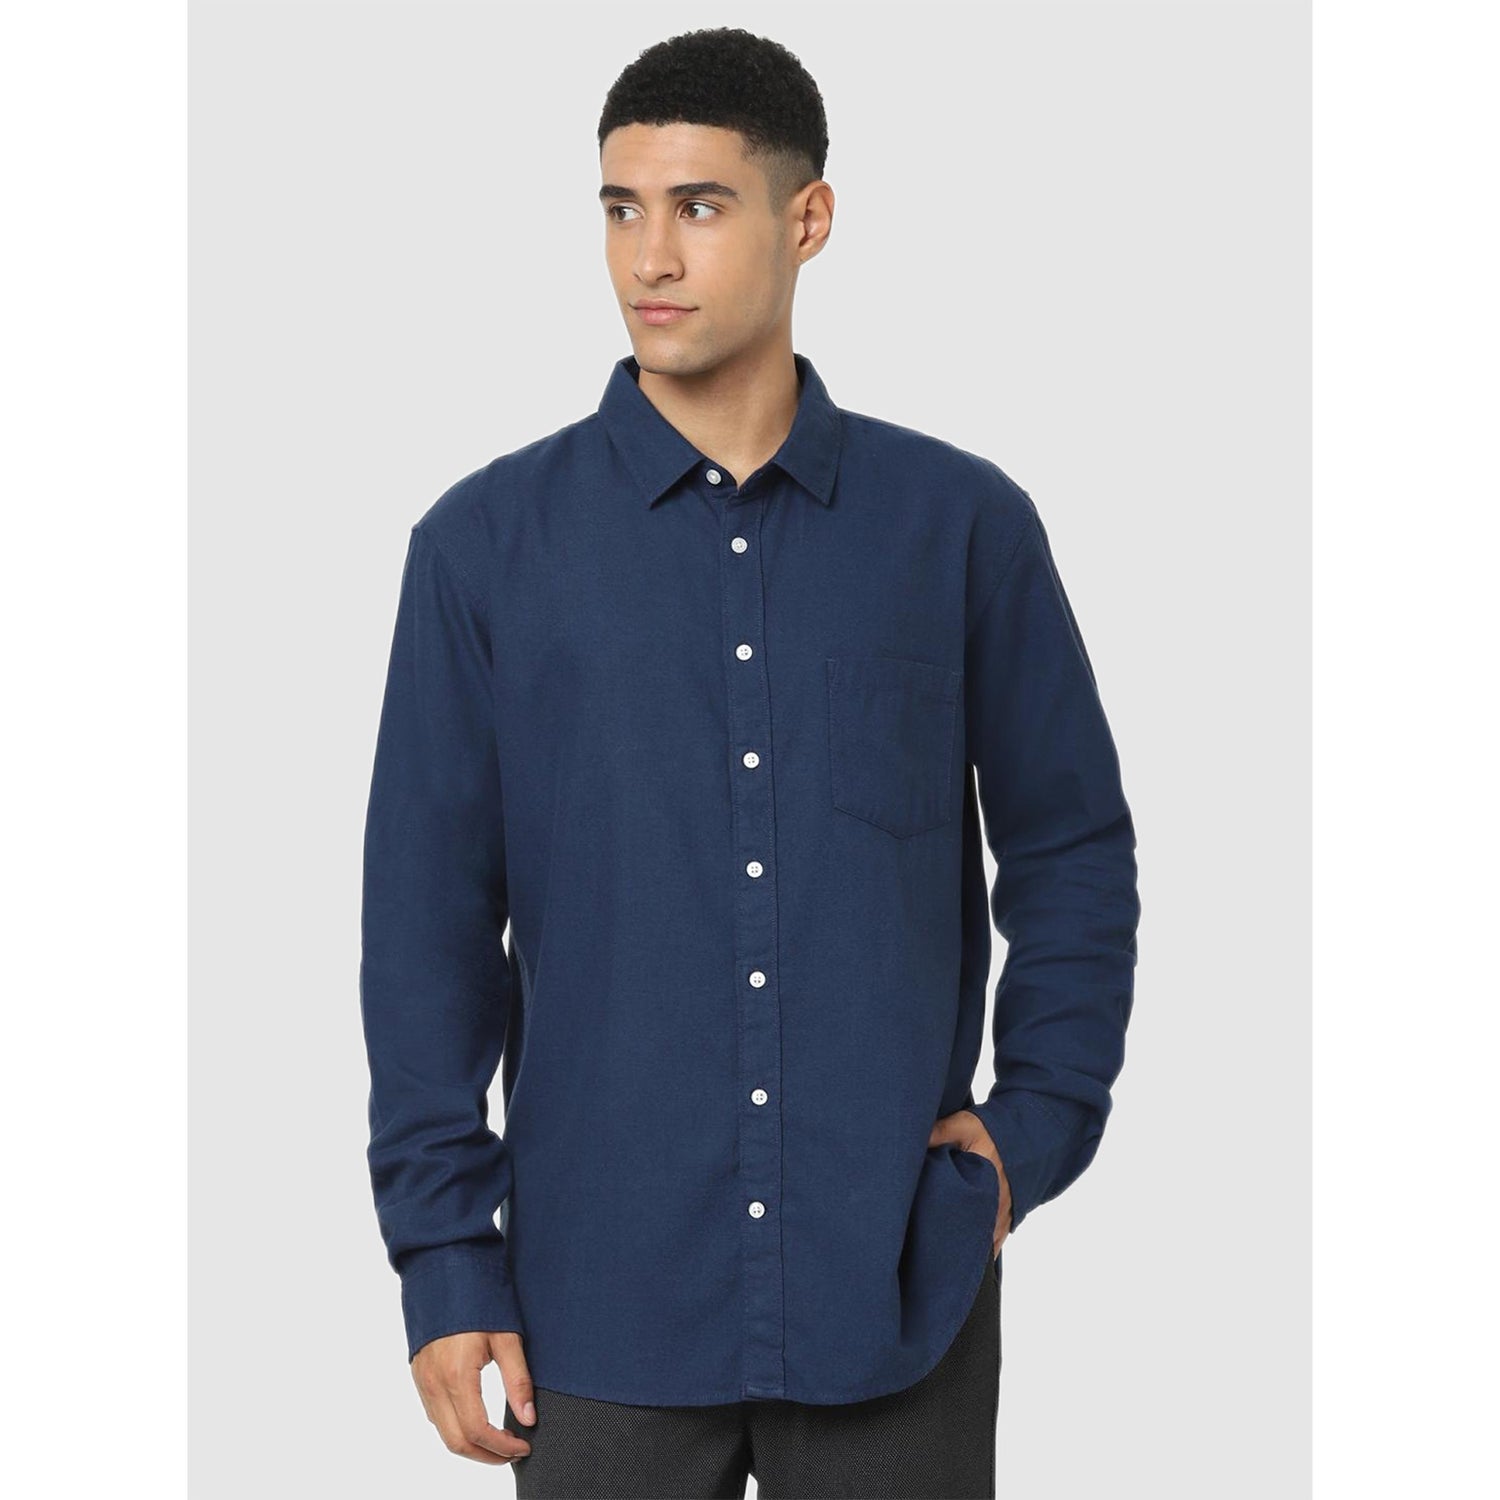 Navy Solid Regular Fit Shirt (Various Sizes)